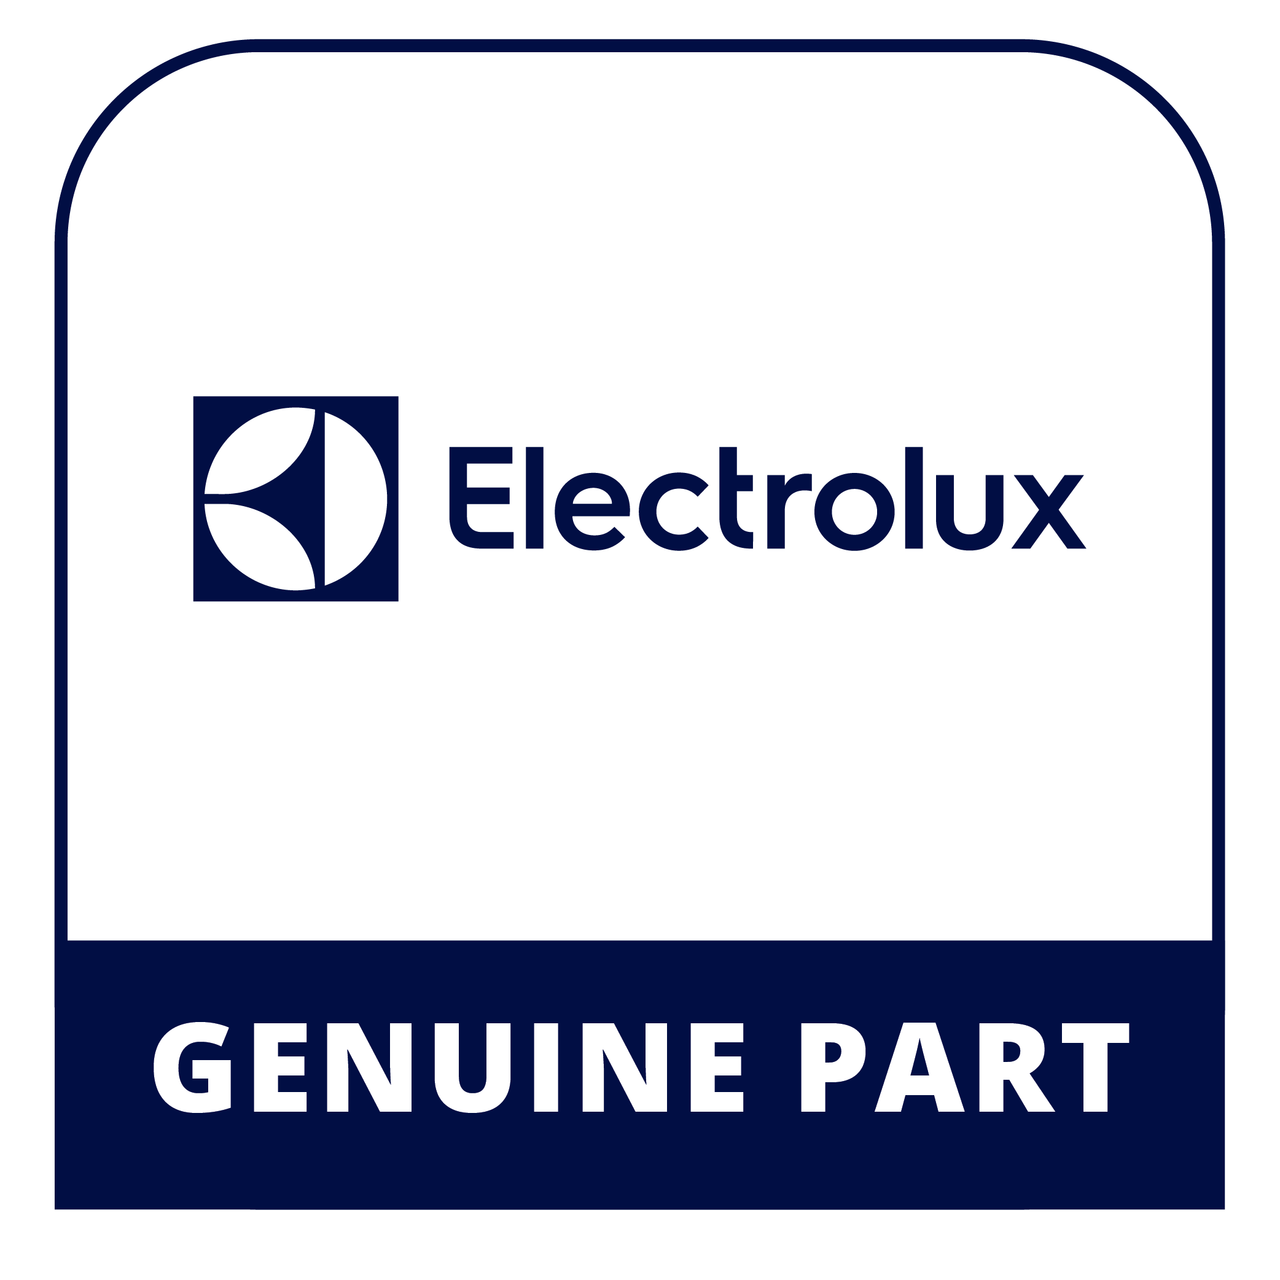 Frigidaire - Electrolux 218428121 - Door Handle - Genuine Electrolux Part